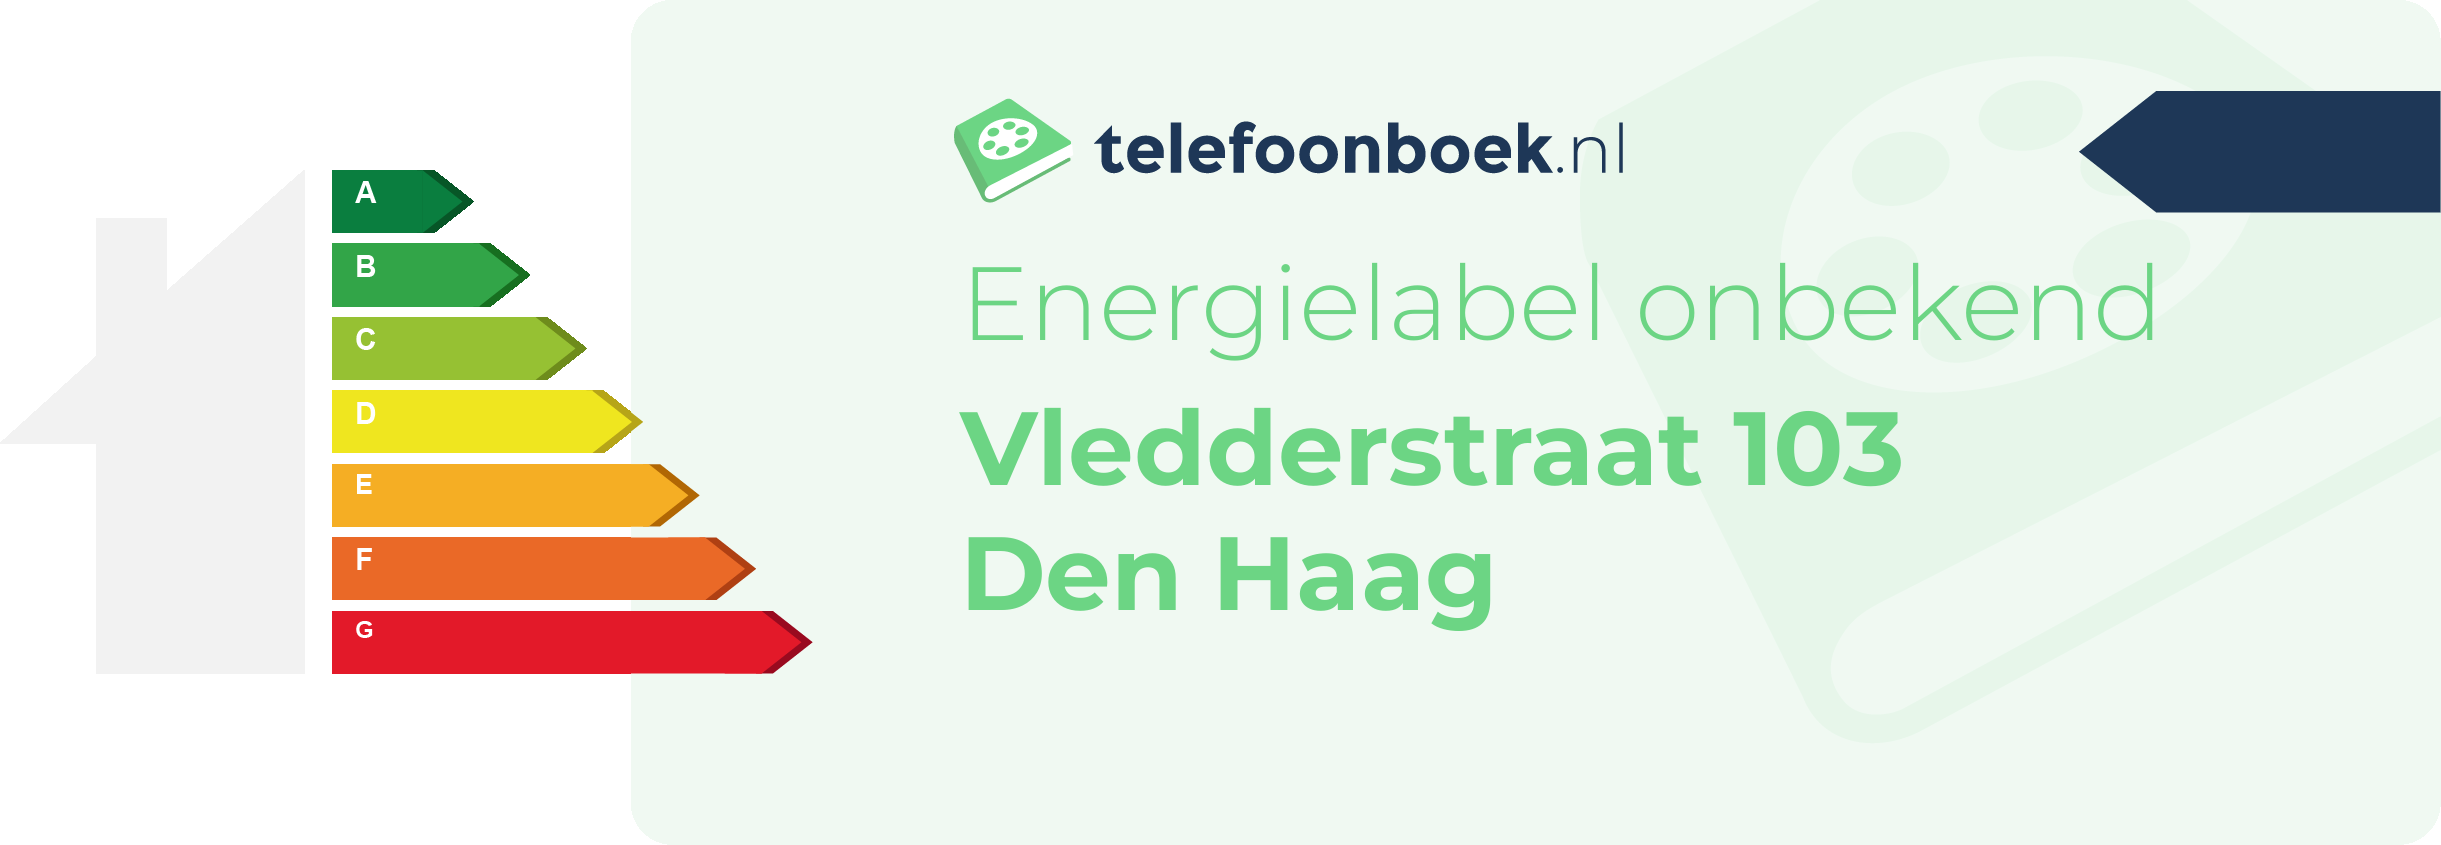 Energielabel Vledderstraat 103 Den Haag